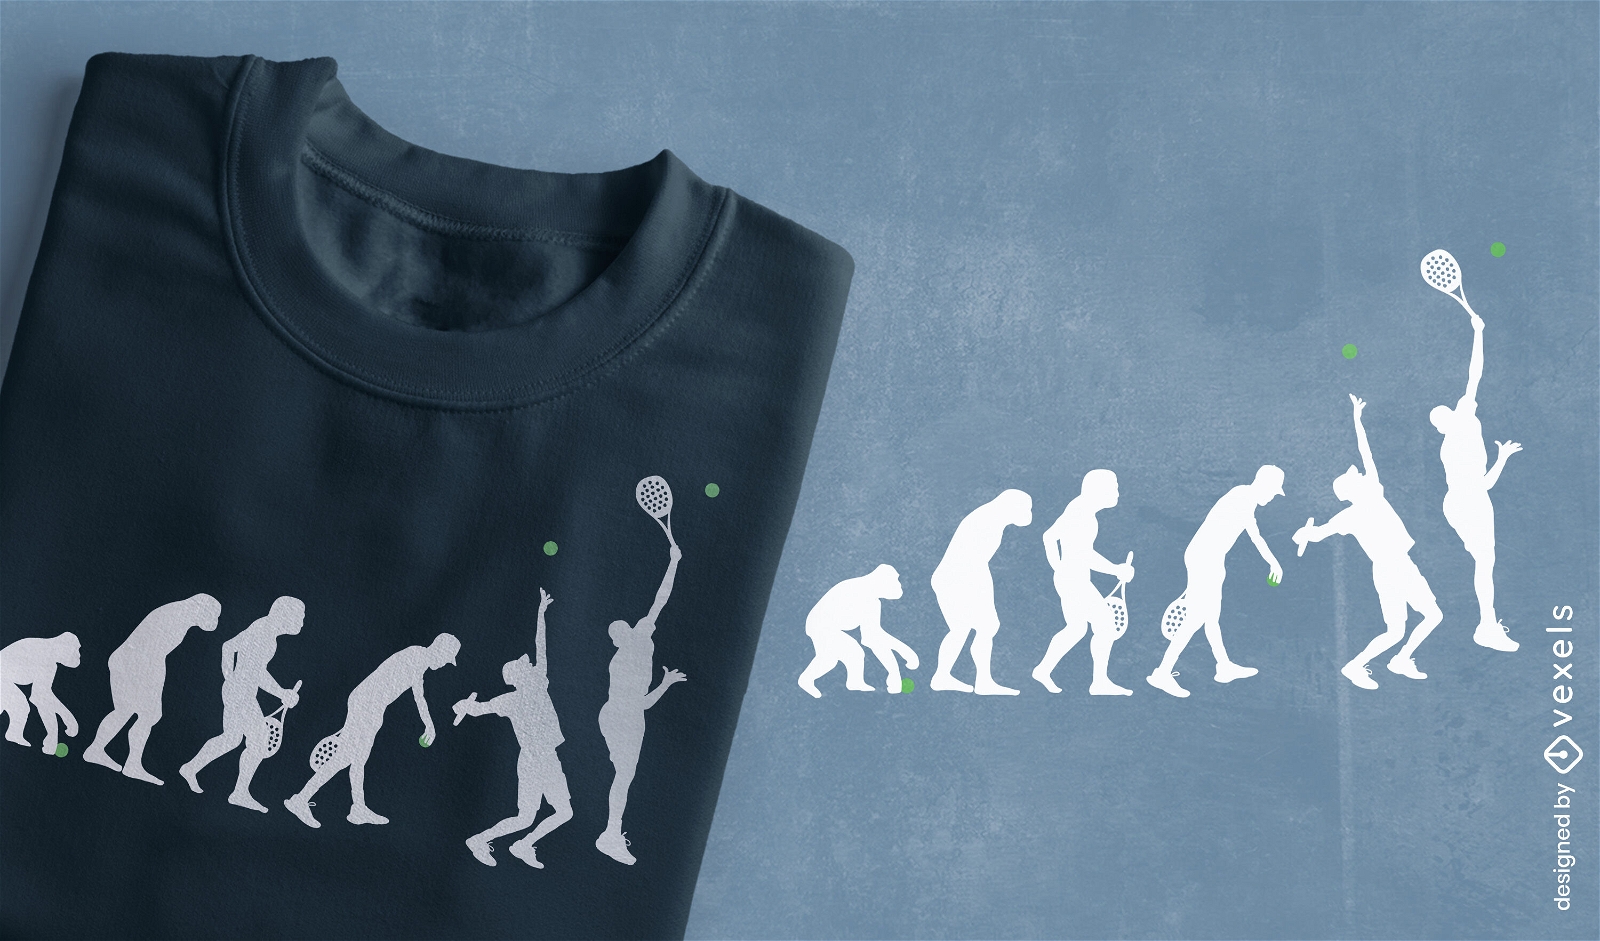 Paddle tennis evolution t-shirt design